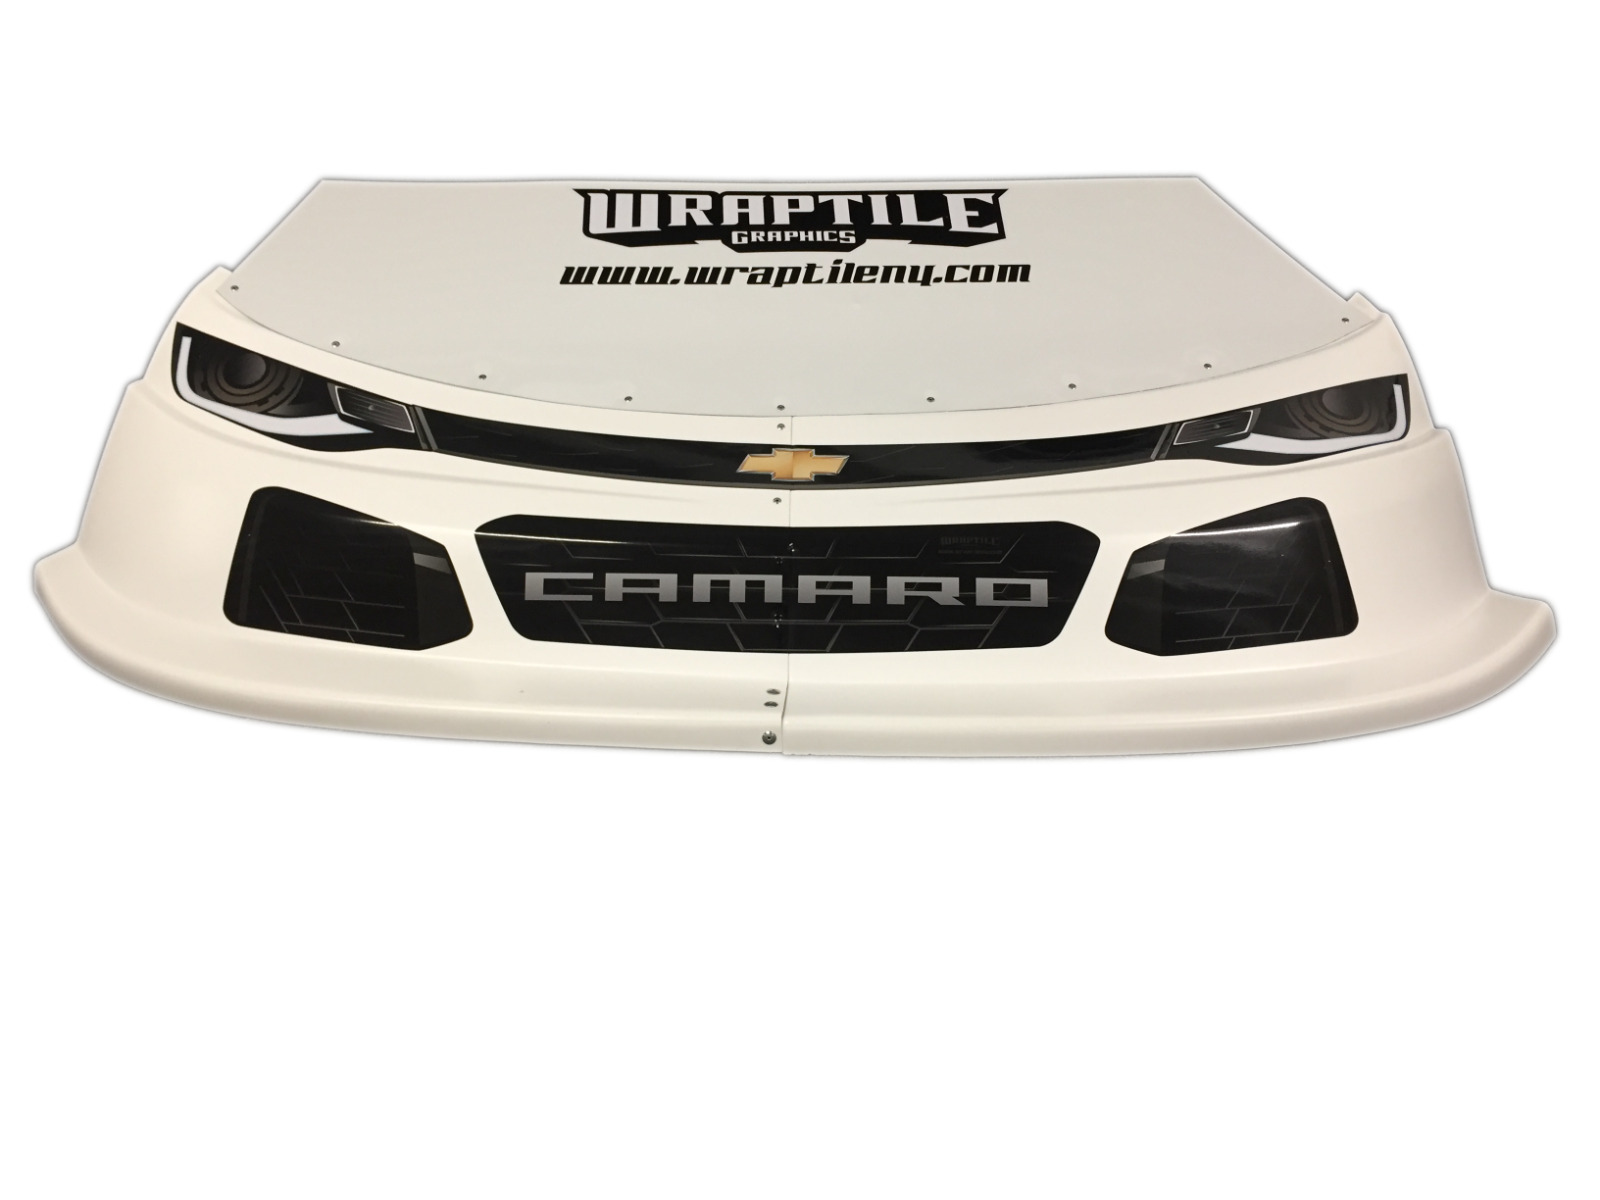 Race Car Headlight Grill Vinyl Decal Graphic Kits